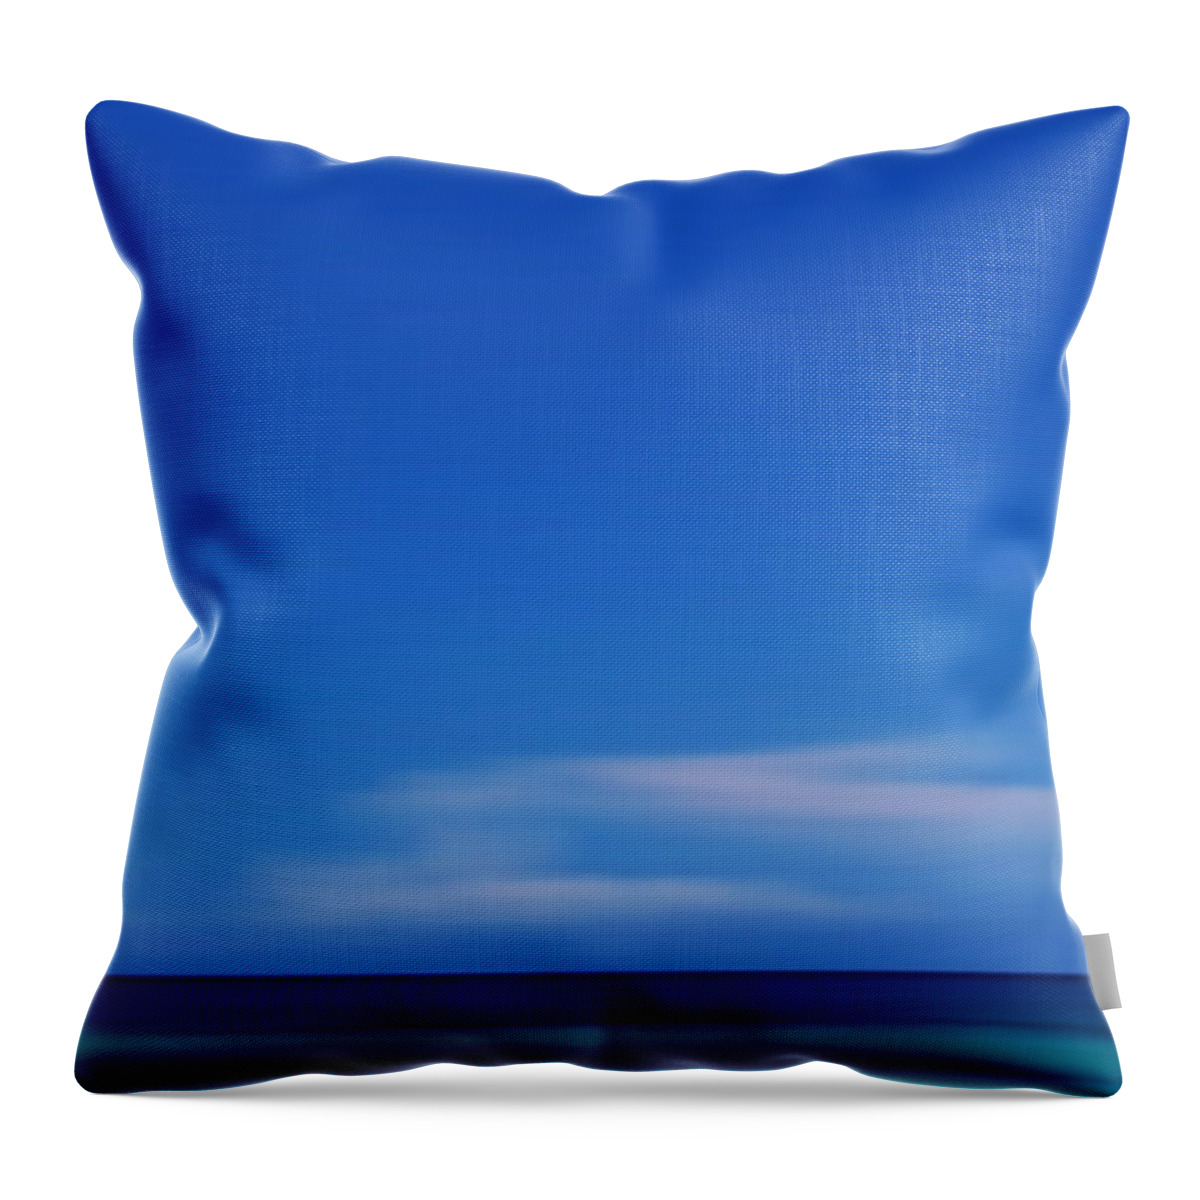 Blue Throw Pillow featuring the digital art Horizon by Deborah Smith